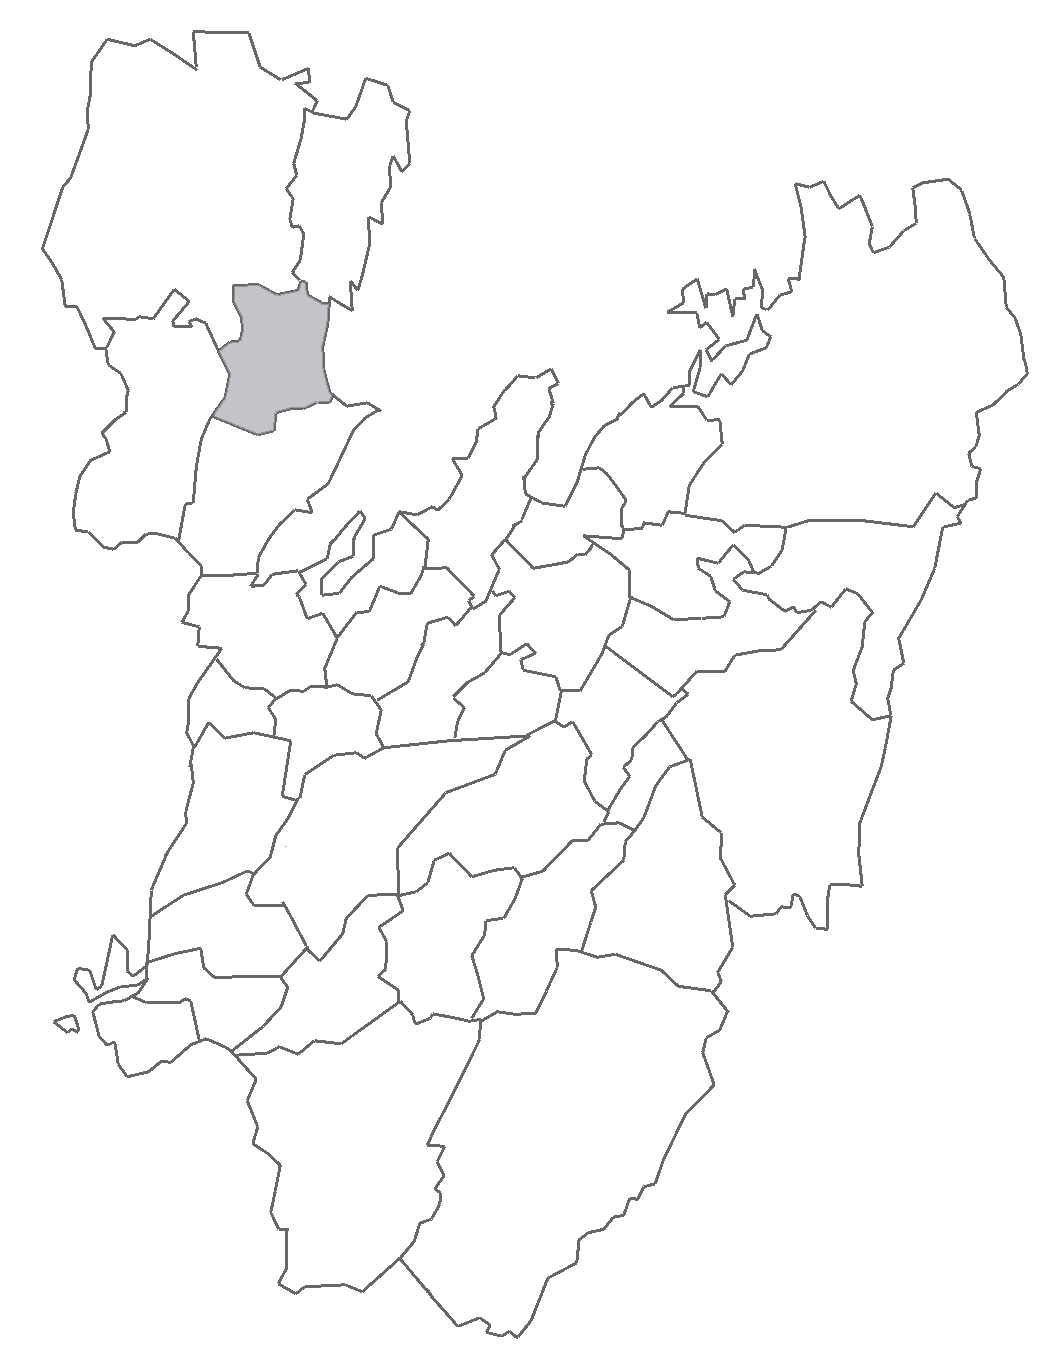 Nordals härad i Dalsland